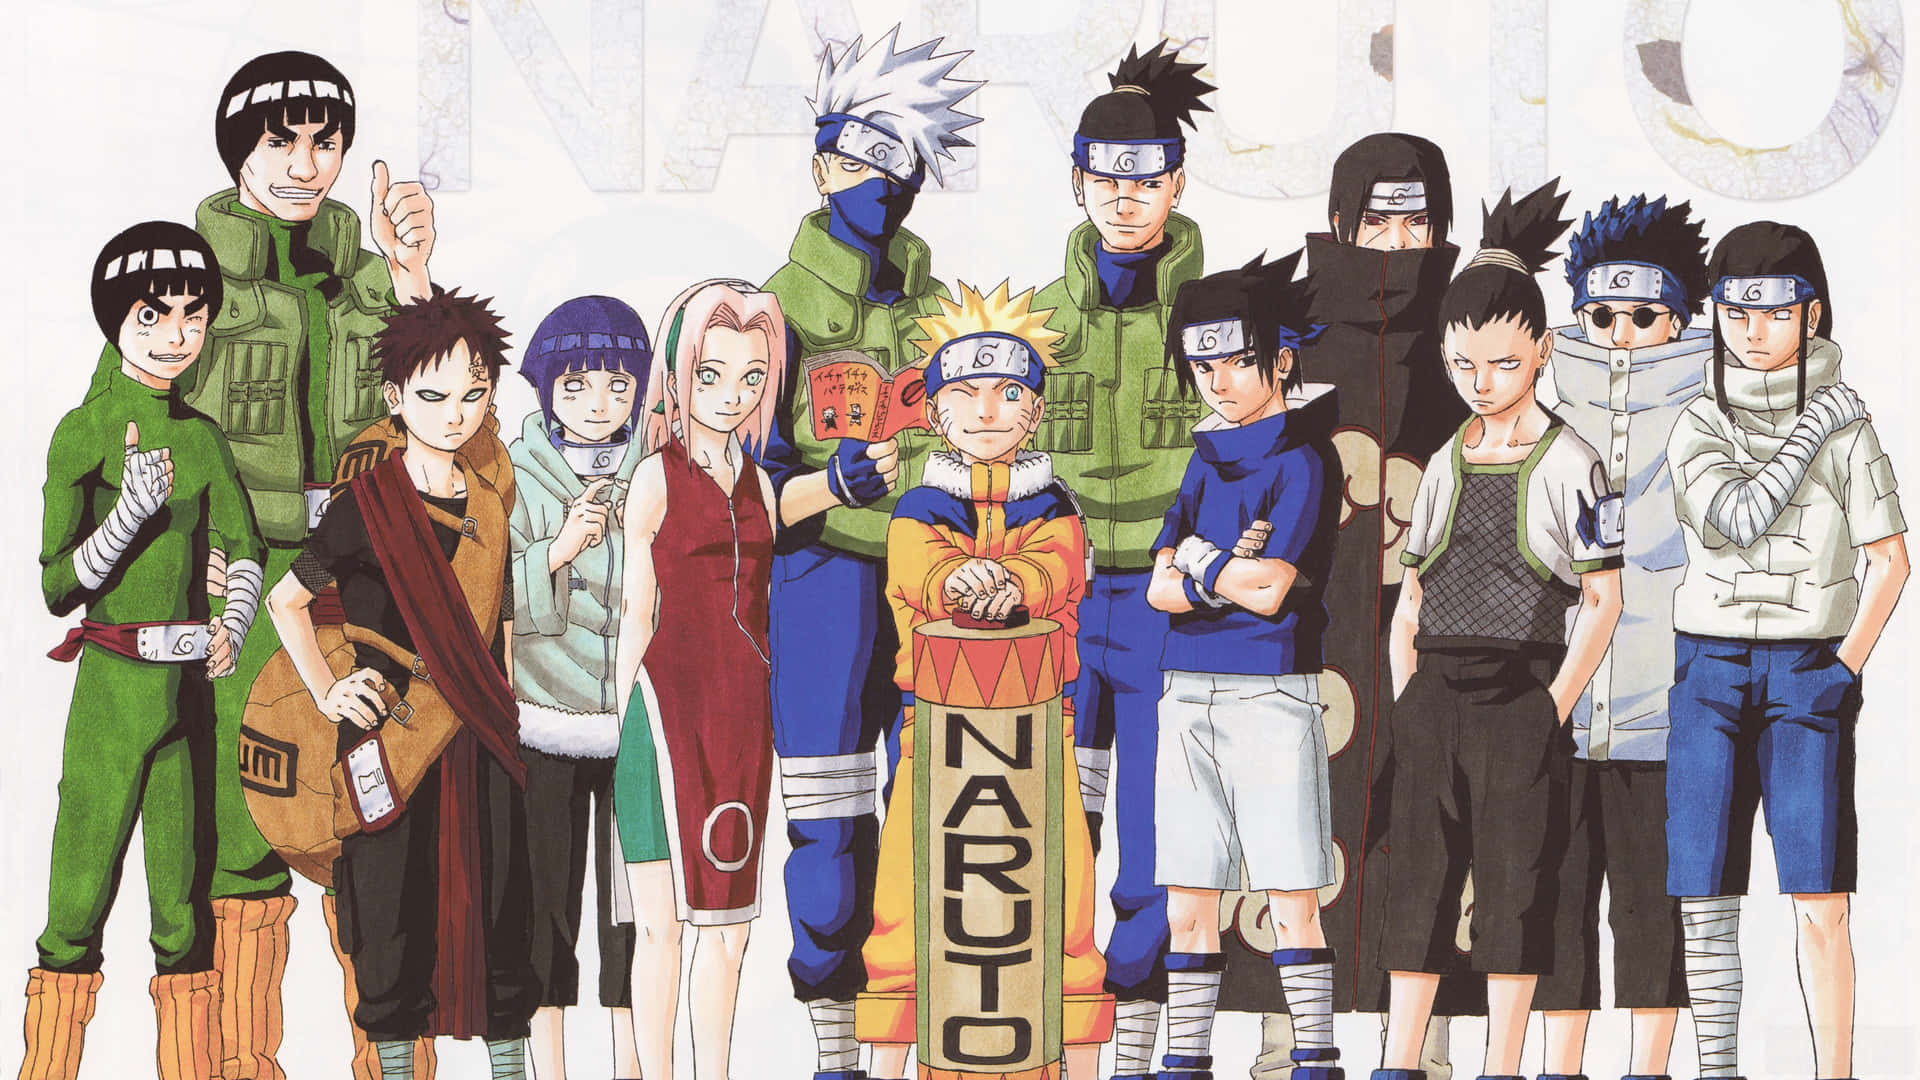 Personagensde Anime Gaara Naruto Papel de Parede